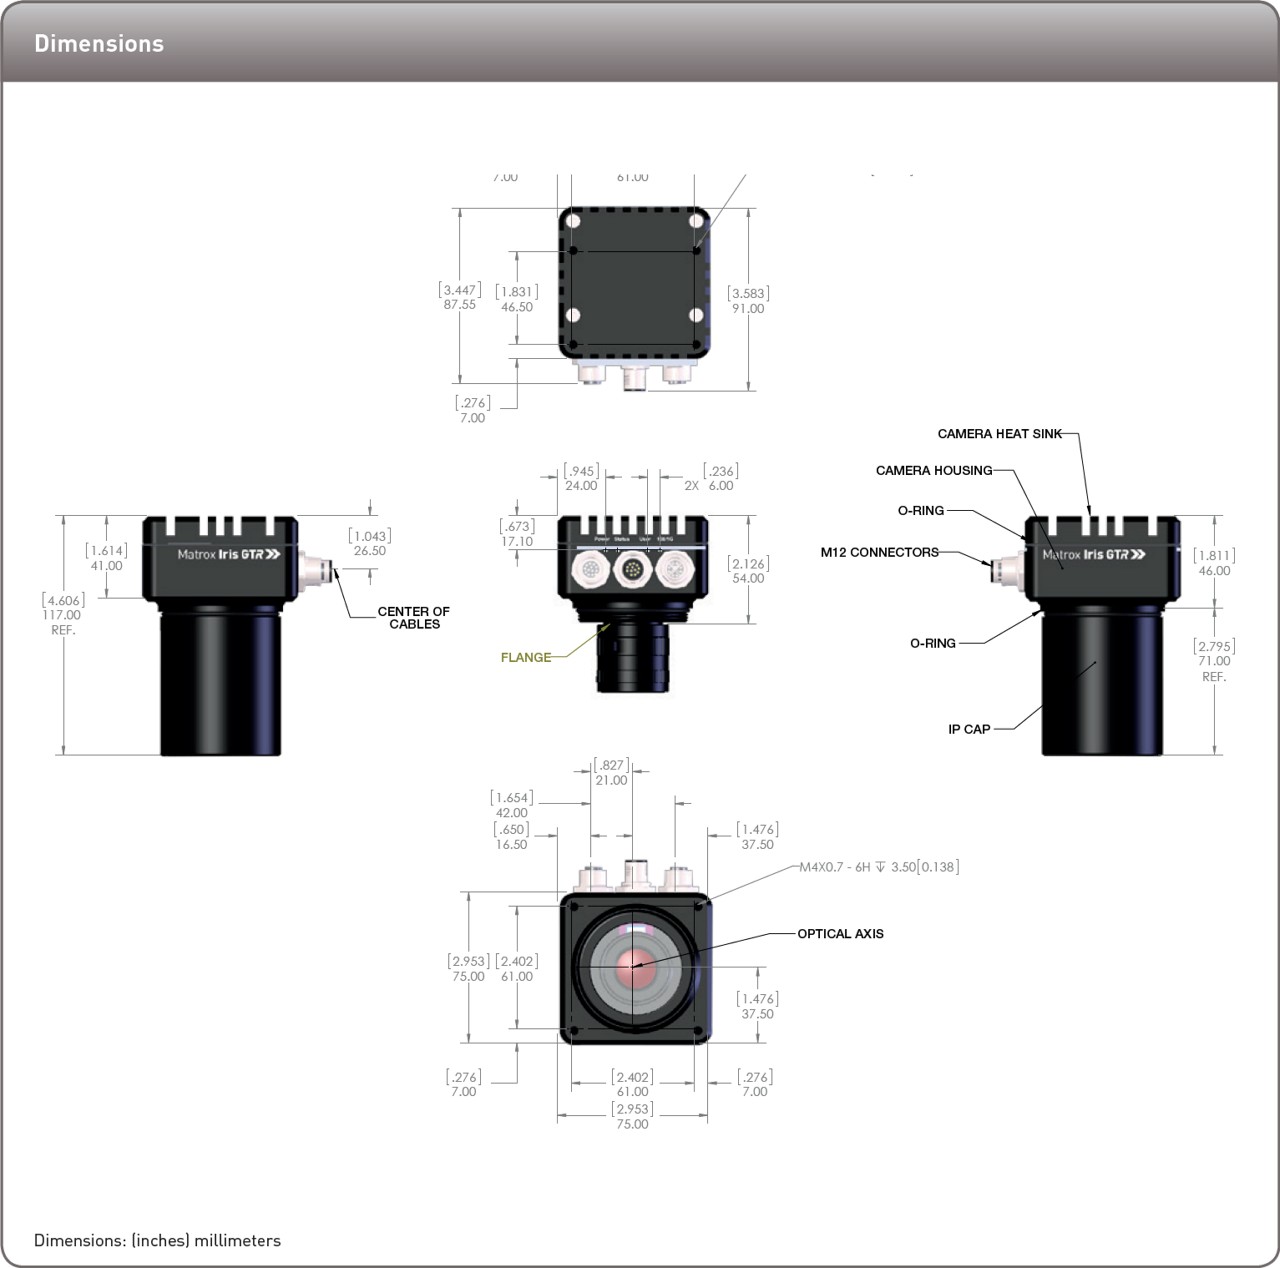 Smart camera Matrox Iris GTR - dimensions